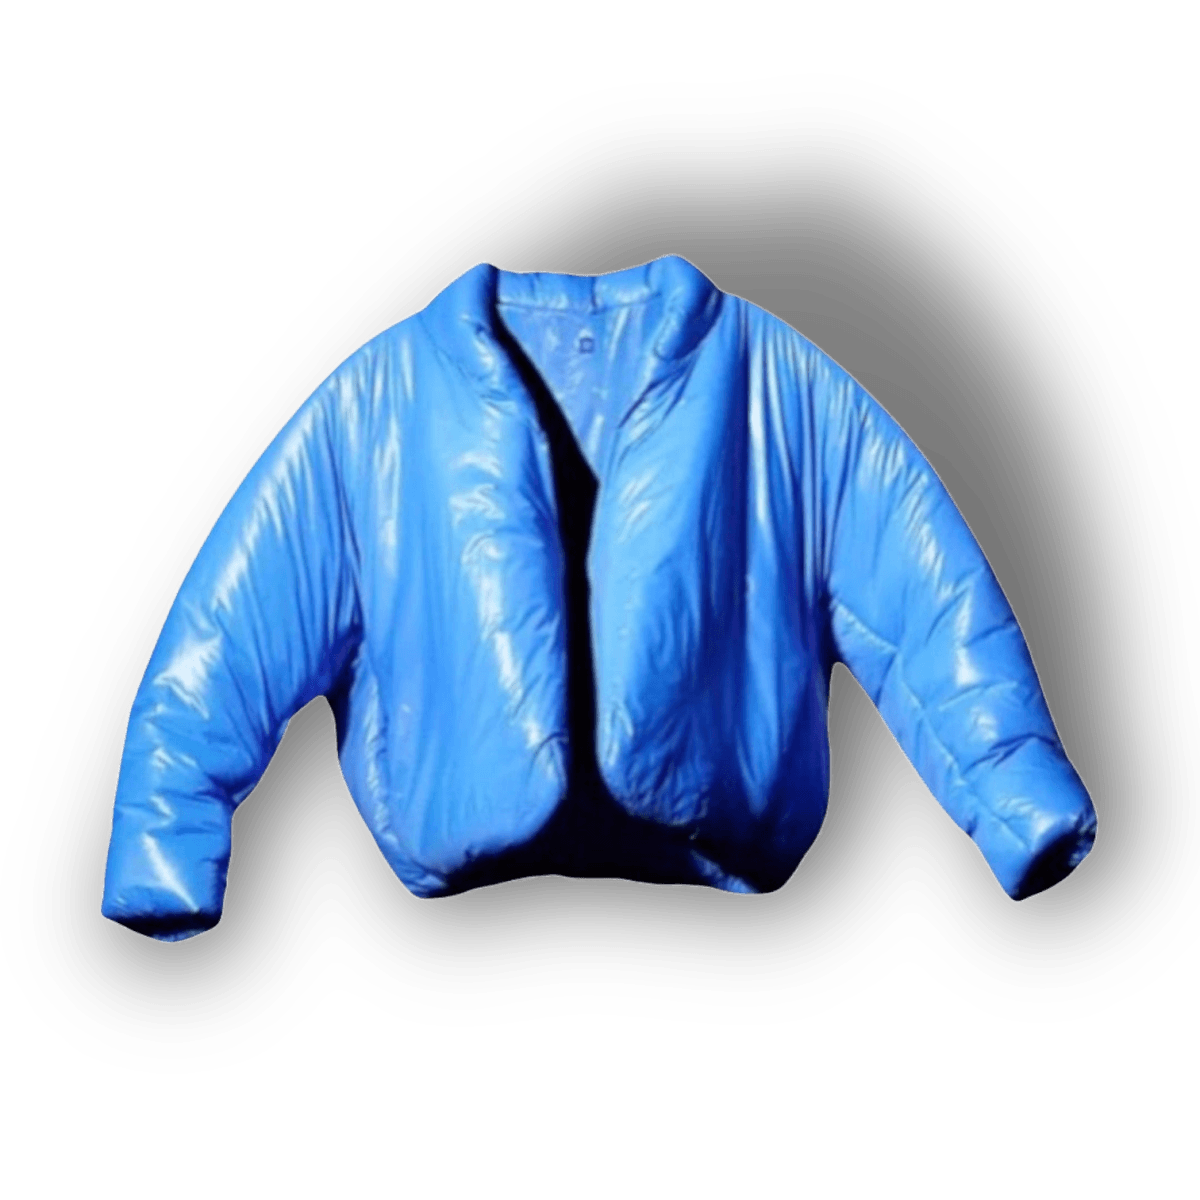 Yeezy x Gap Round Jacket Blue - Outerwear - Yeezy - Jawns on Fire